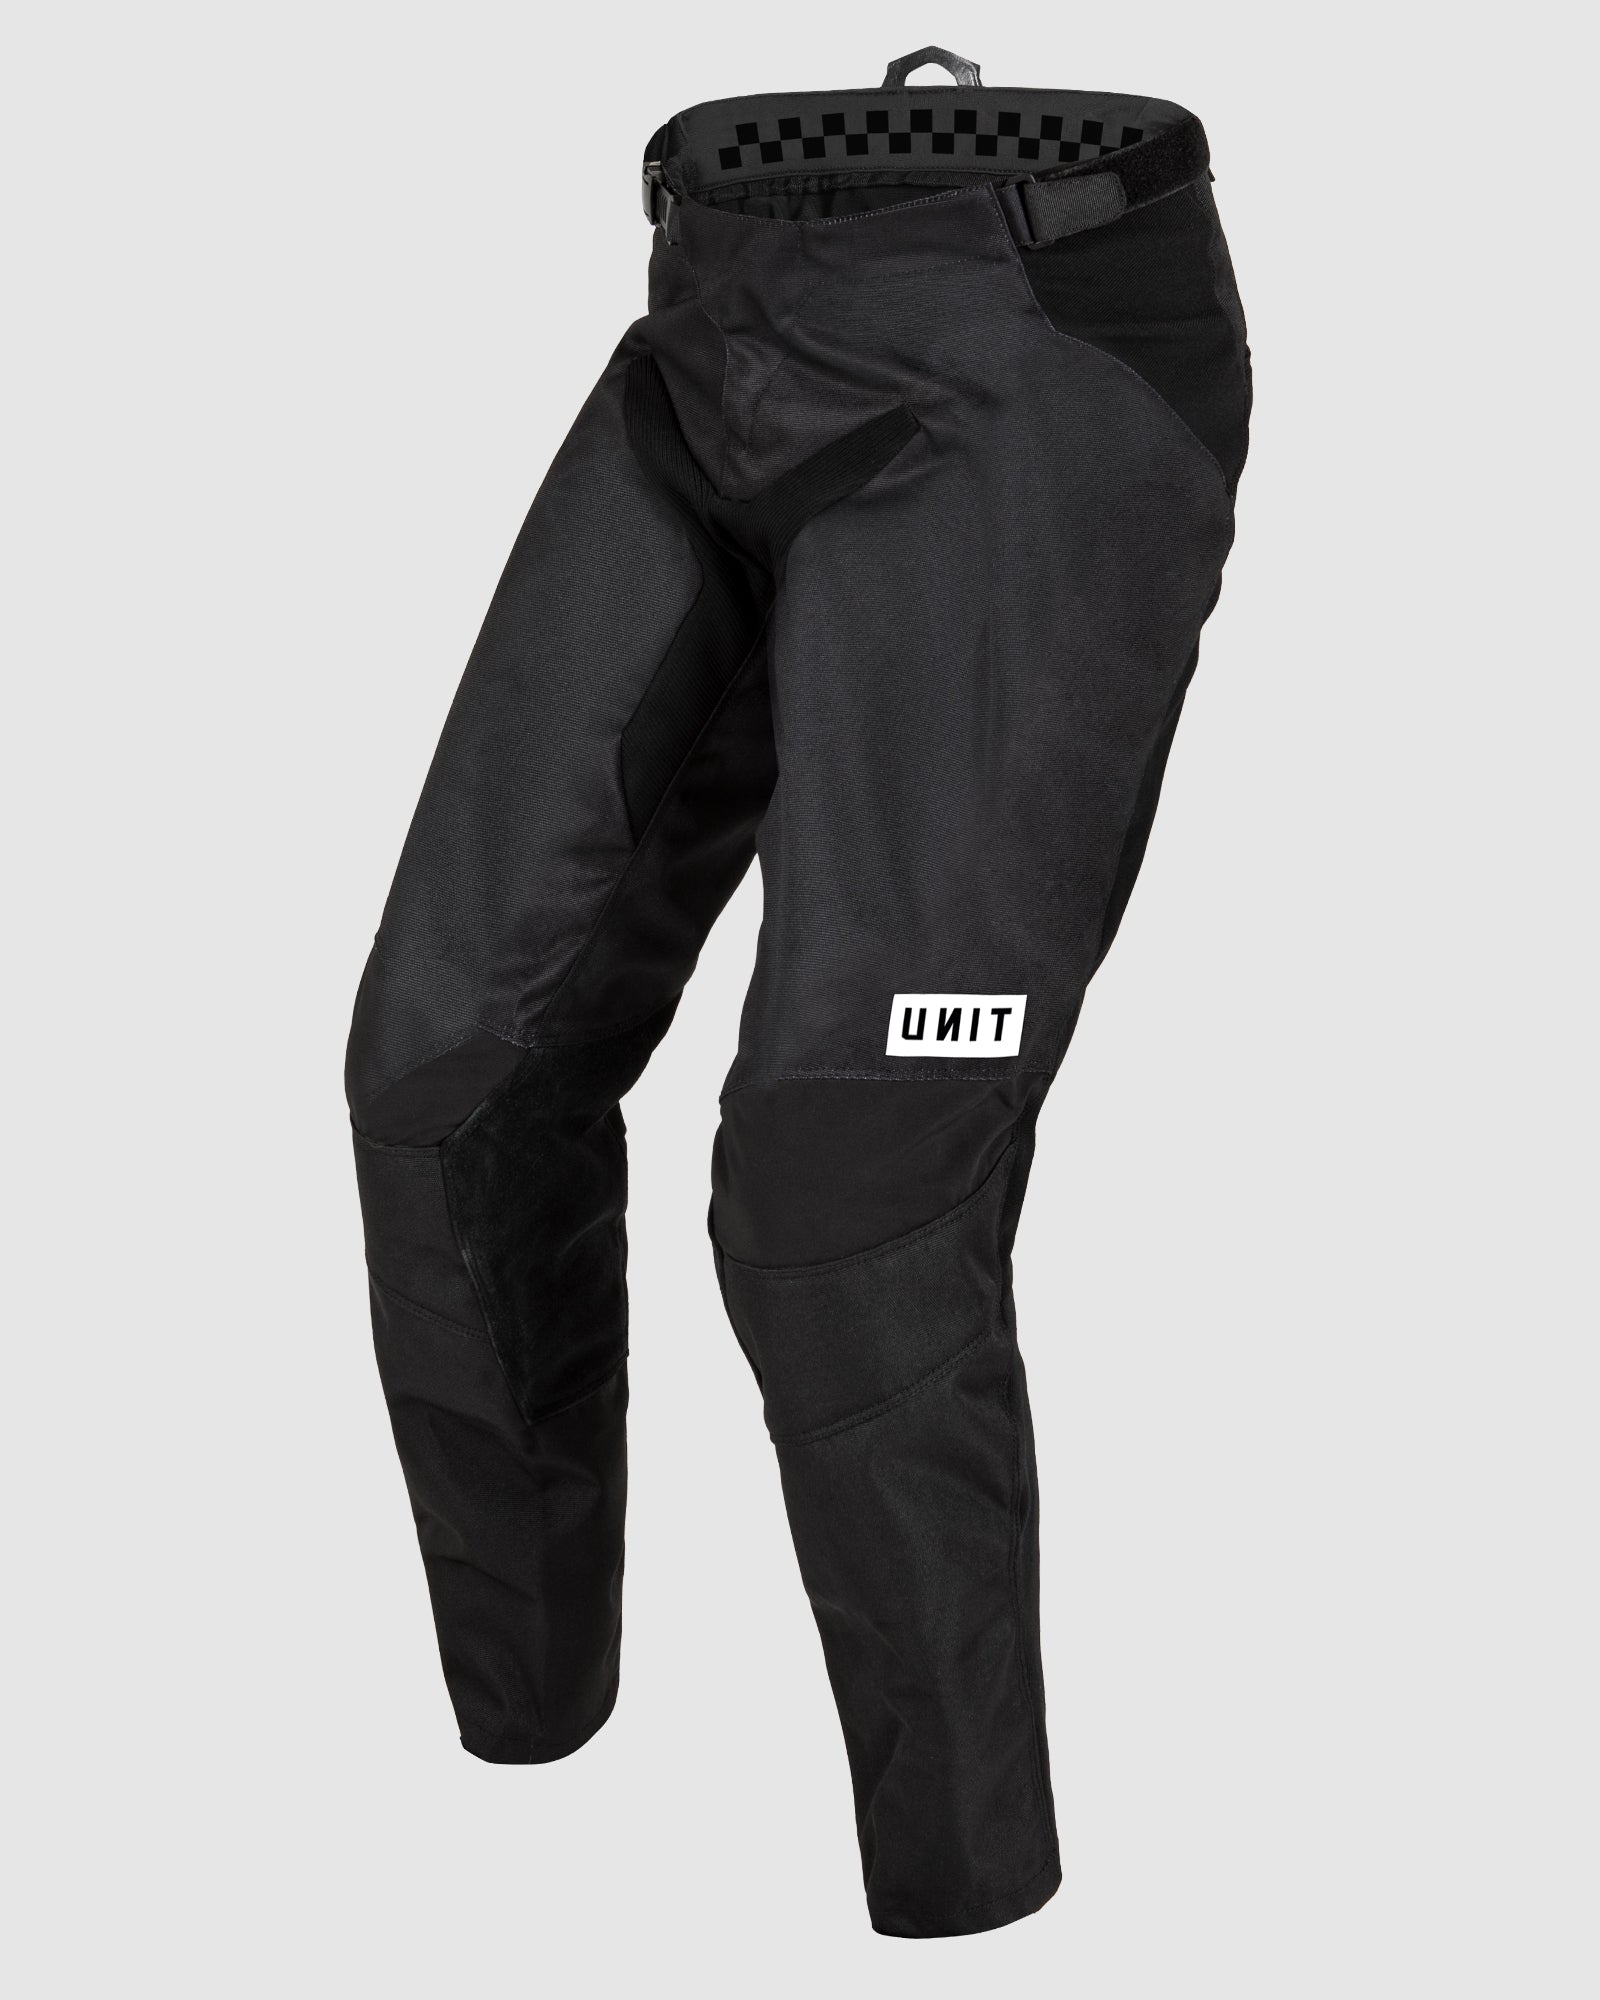 Moto Art - Set of MX pants and MX jersey YOKO TRE+SCRAMBLE black; black/red  28 (S) - YOKO - YOKO SCRAMBLE and TRE set of MX pants and MX jersey - Set